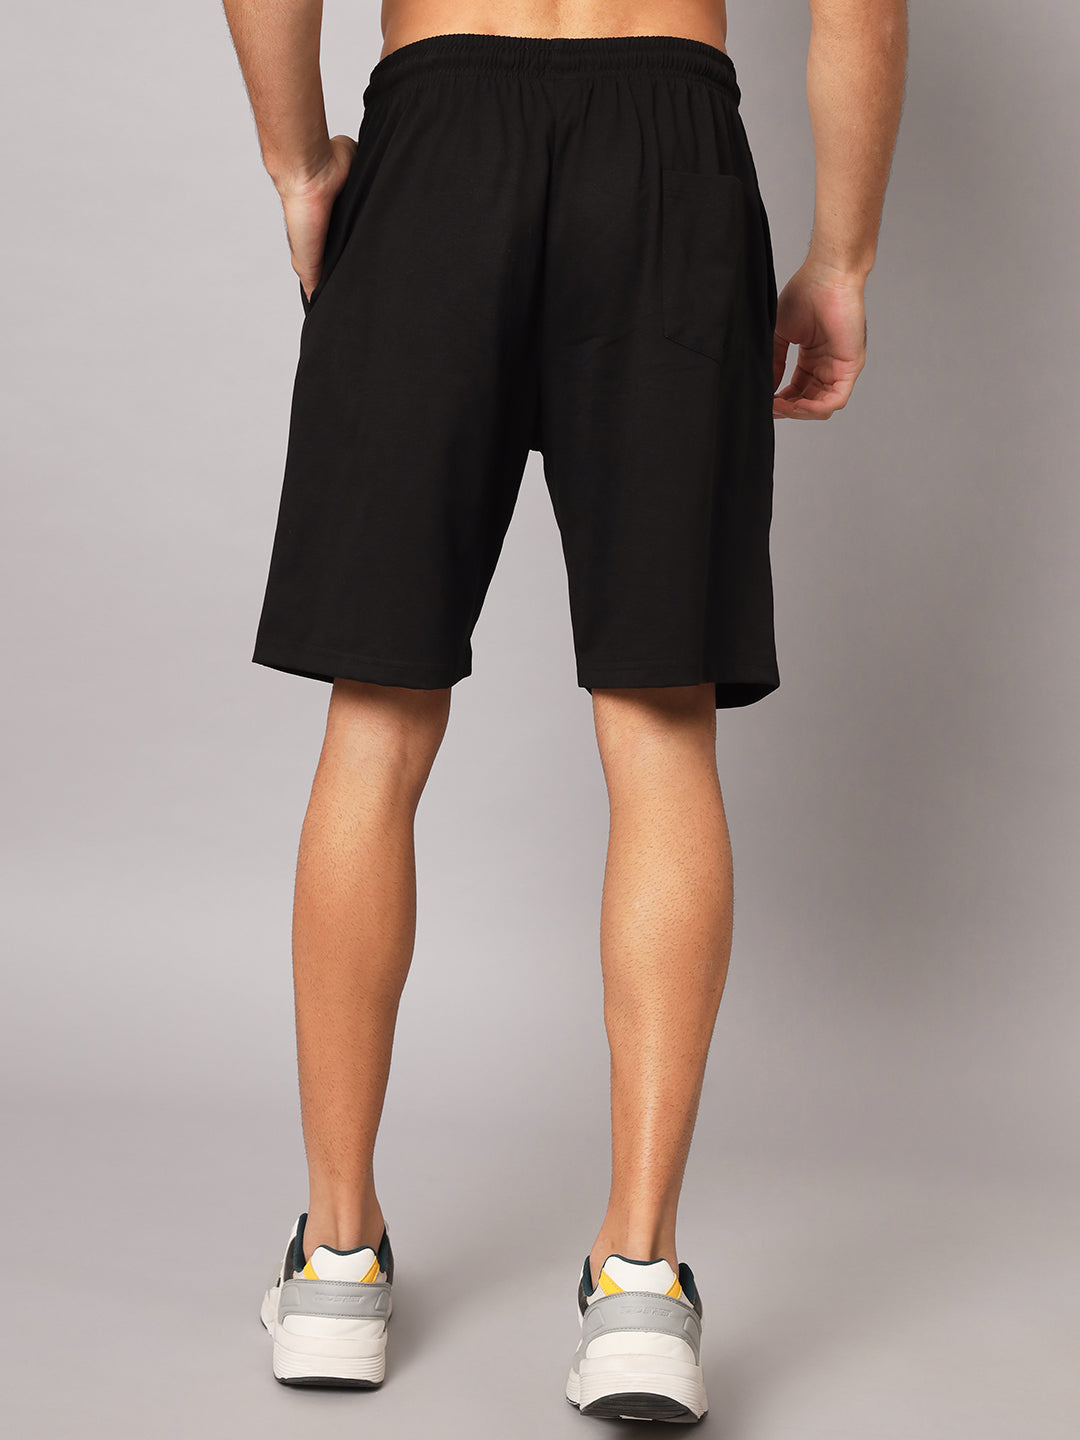 GRIFFEL Men Basic Solid Black Loose fit Shorts - griffel